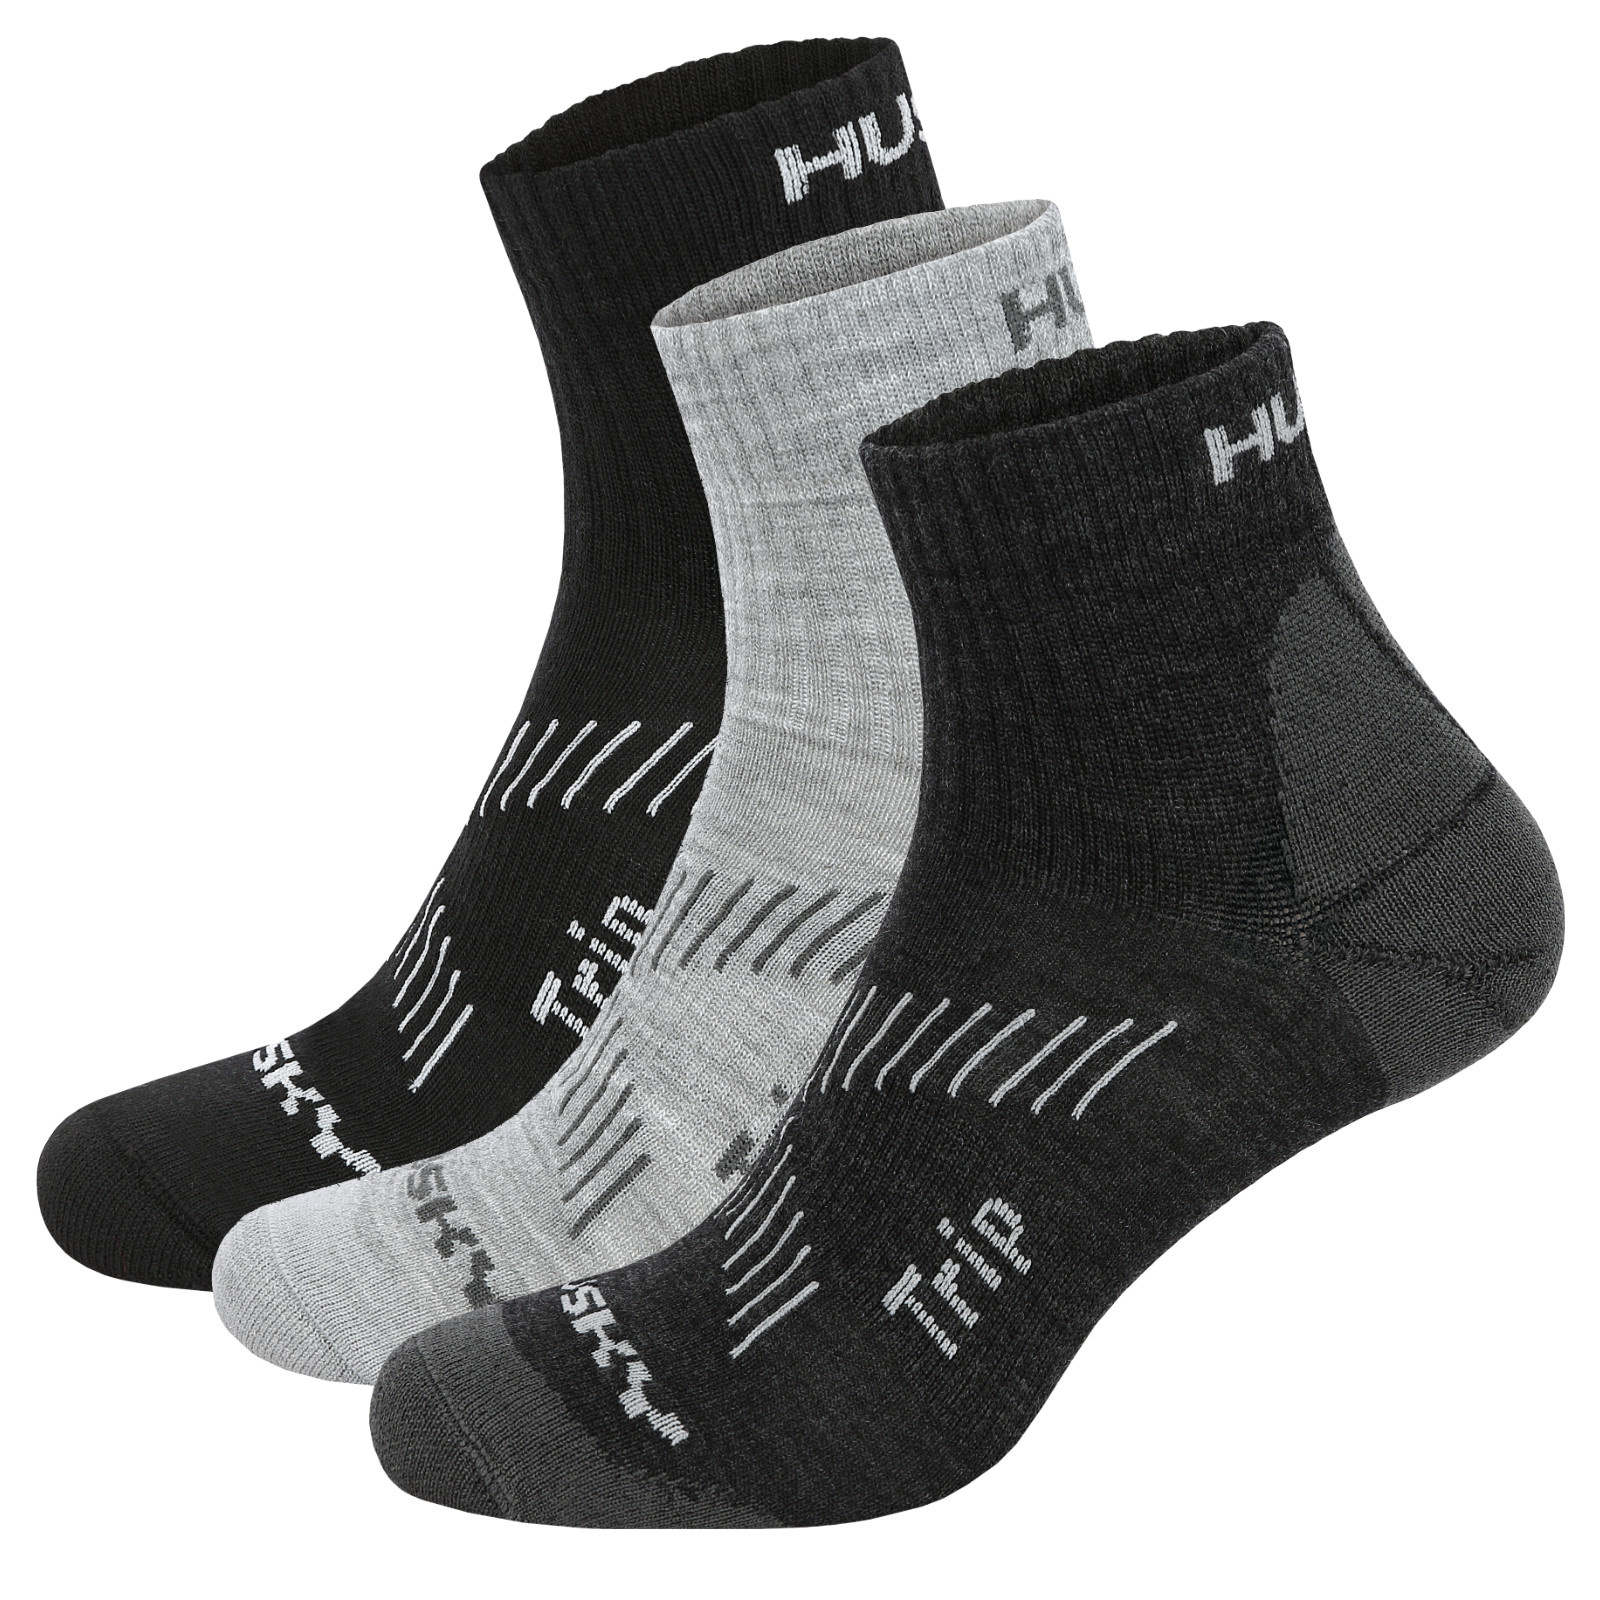 Socks Trip 3pack HUSKY black/light grey/dark. gray